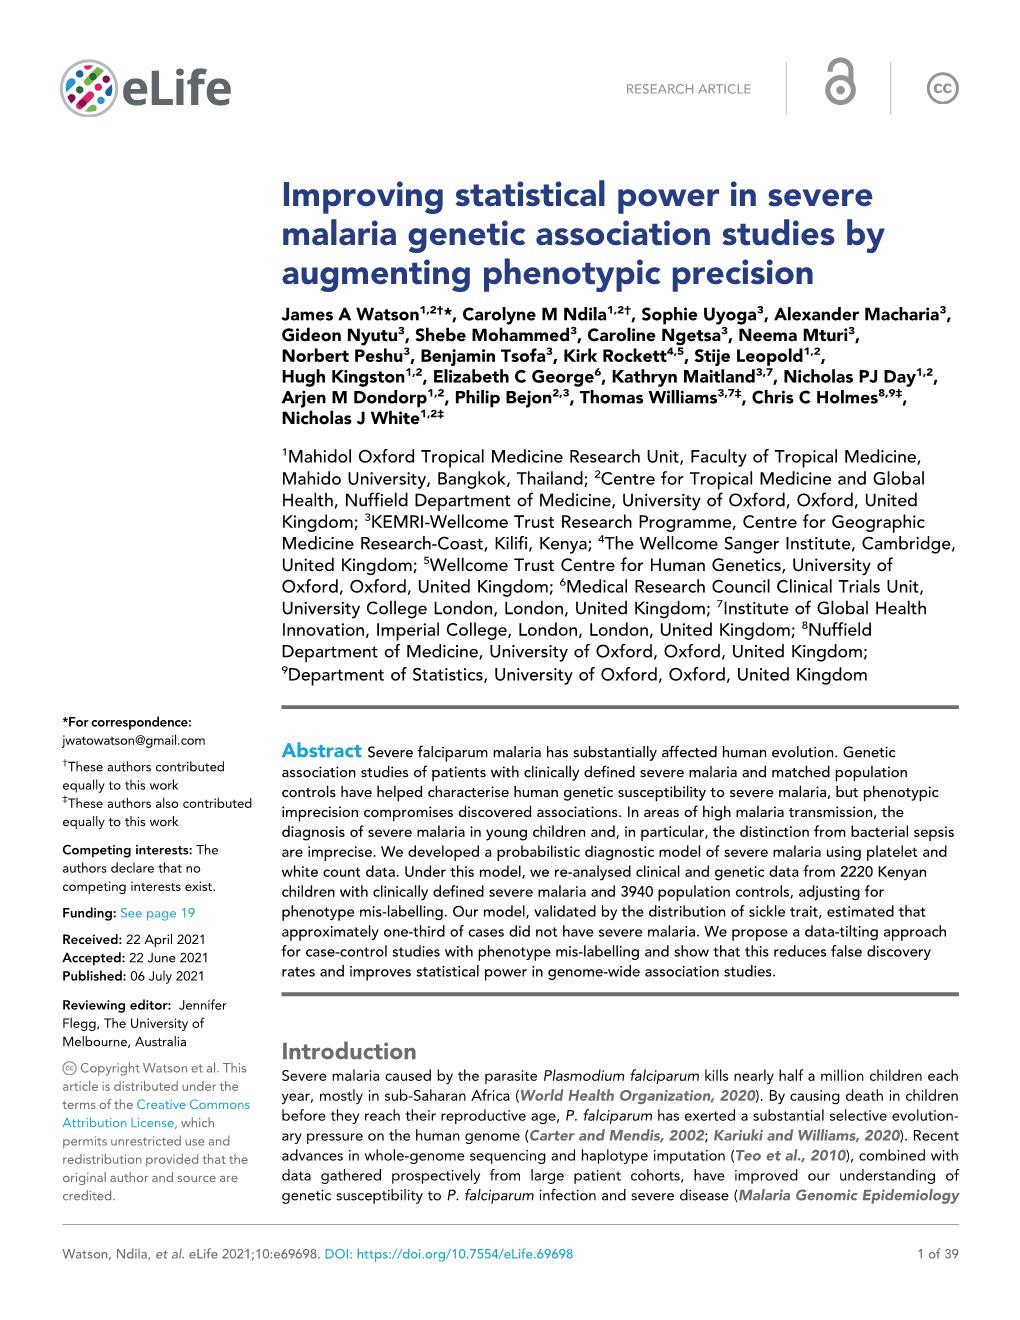 Improving Statistical Power in Severe Malaria Genetic Association Studies